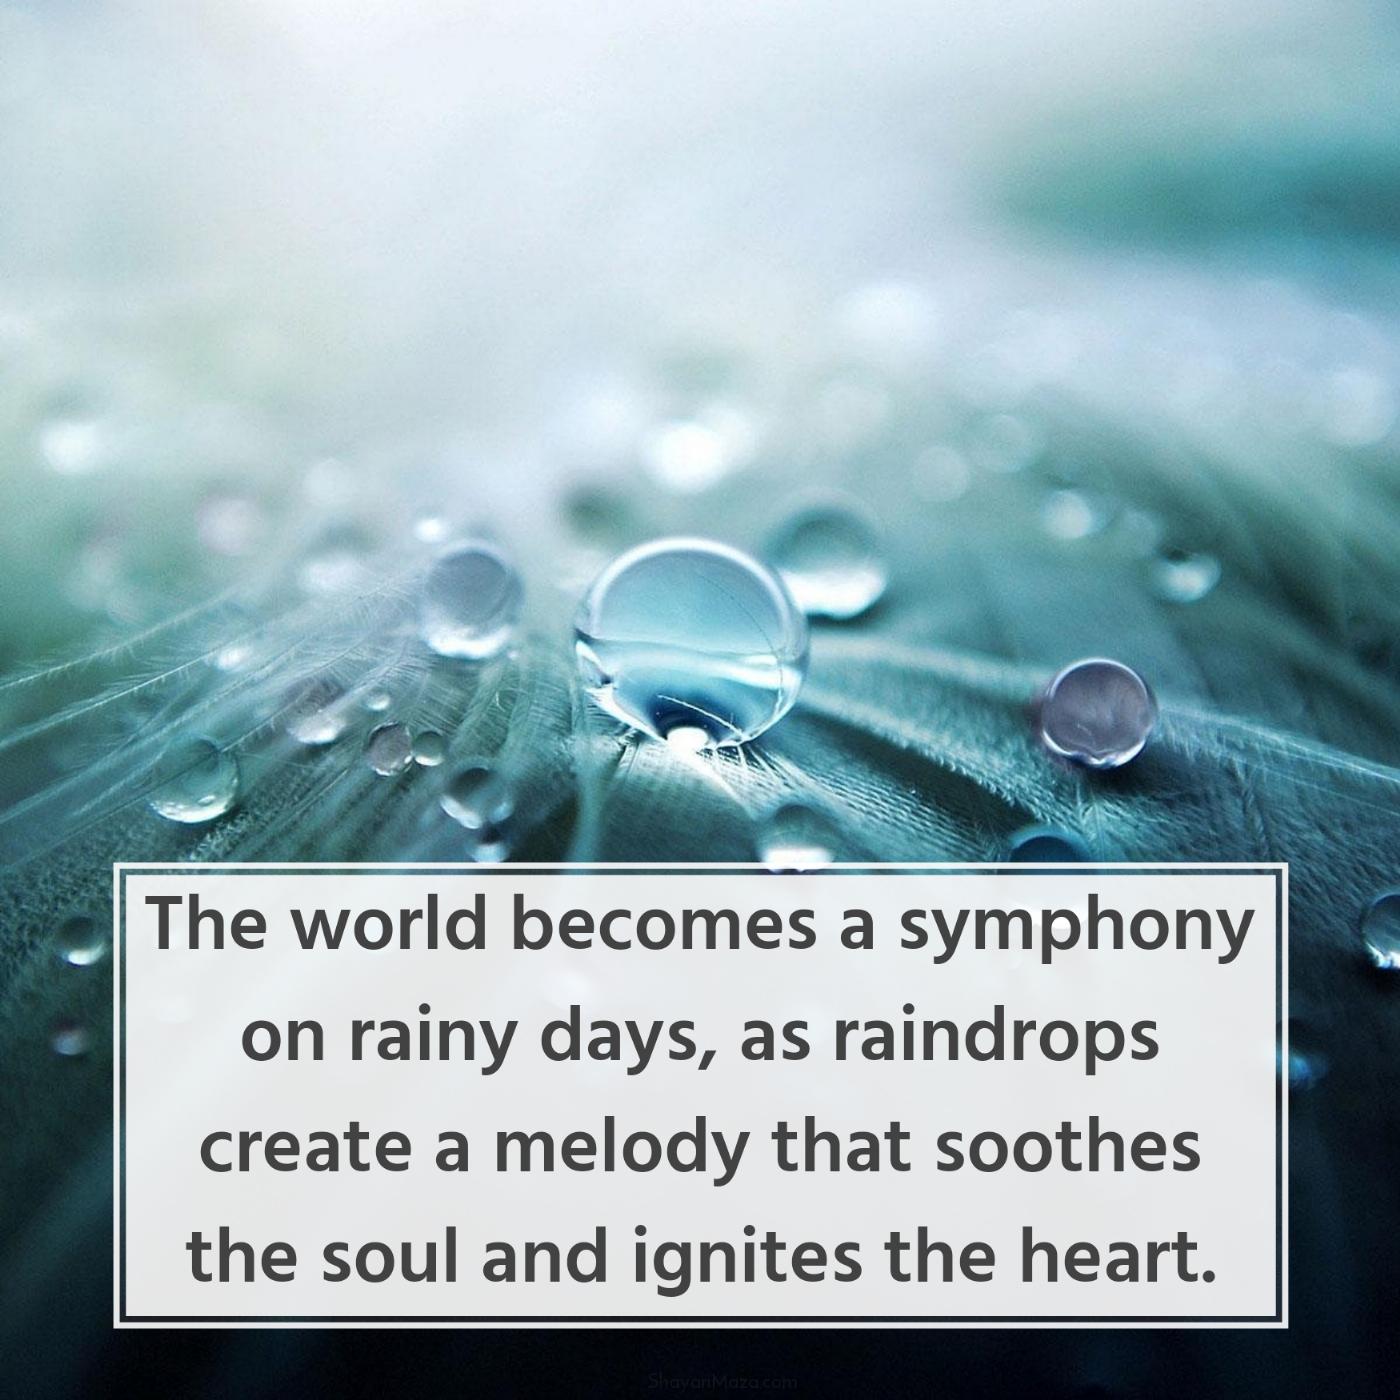 The world becomes a symphony on rainy days